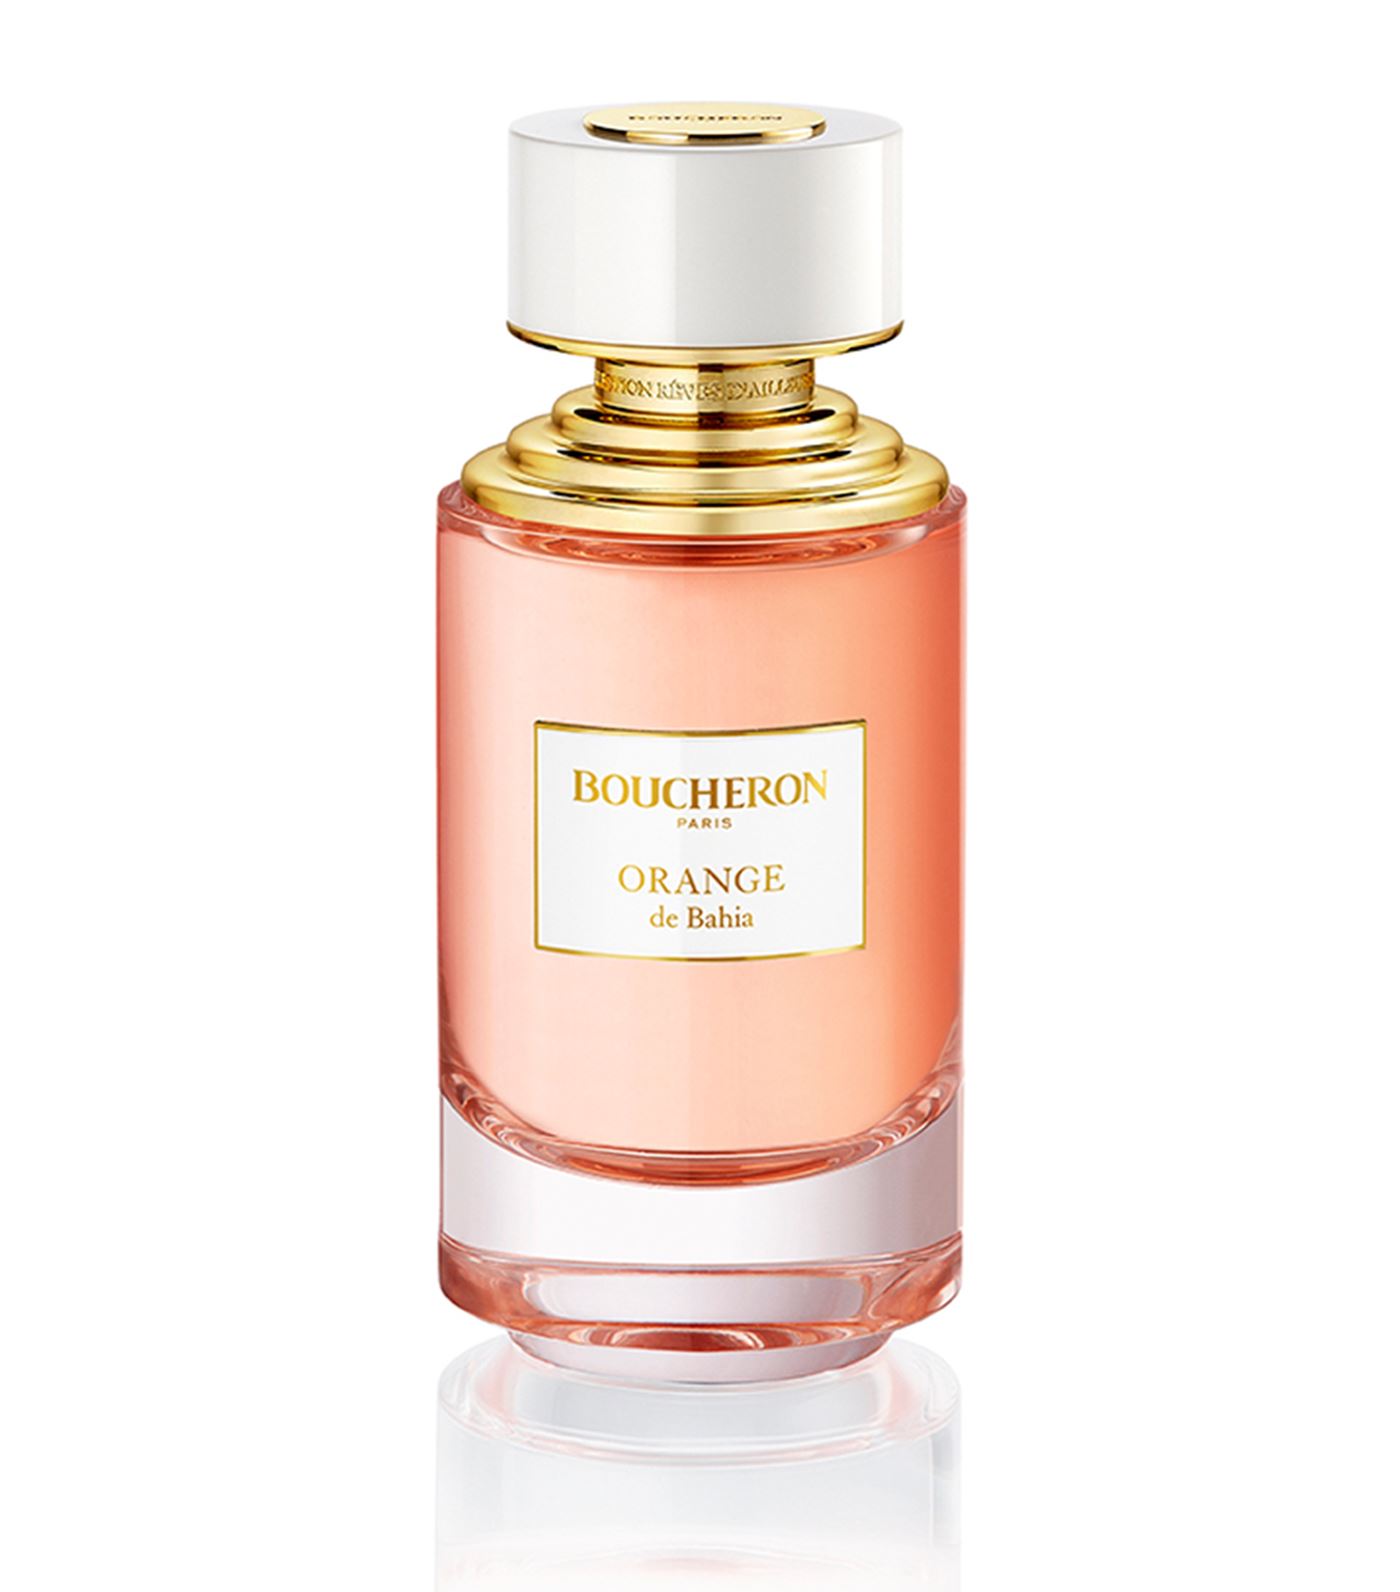 Orange De Bahia Boucheron perfume - a fragrance for women and men 2019